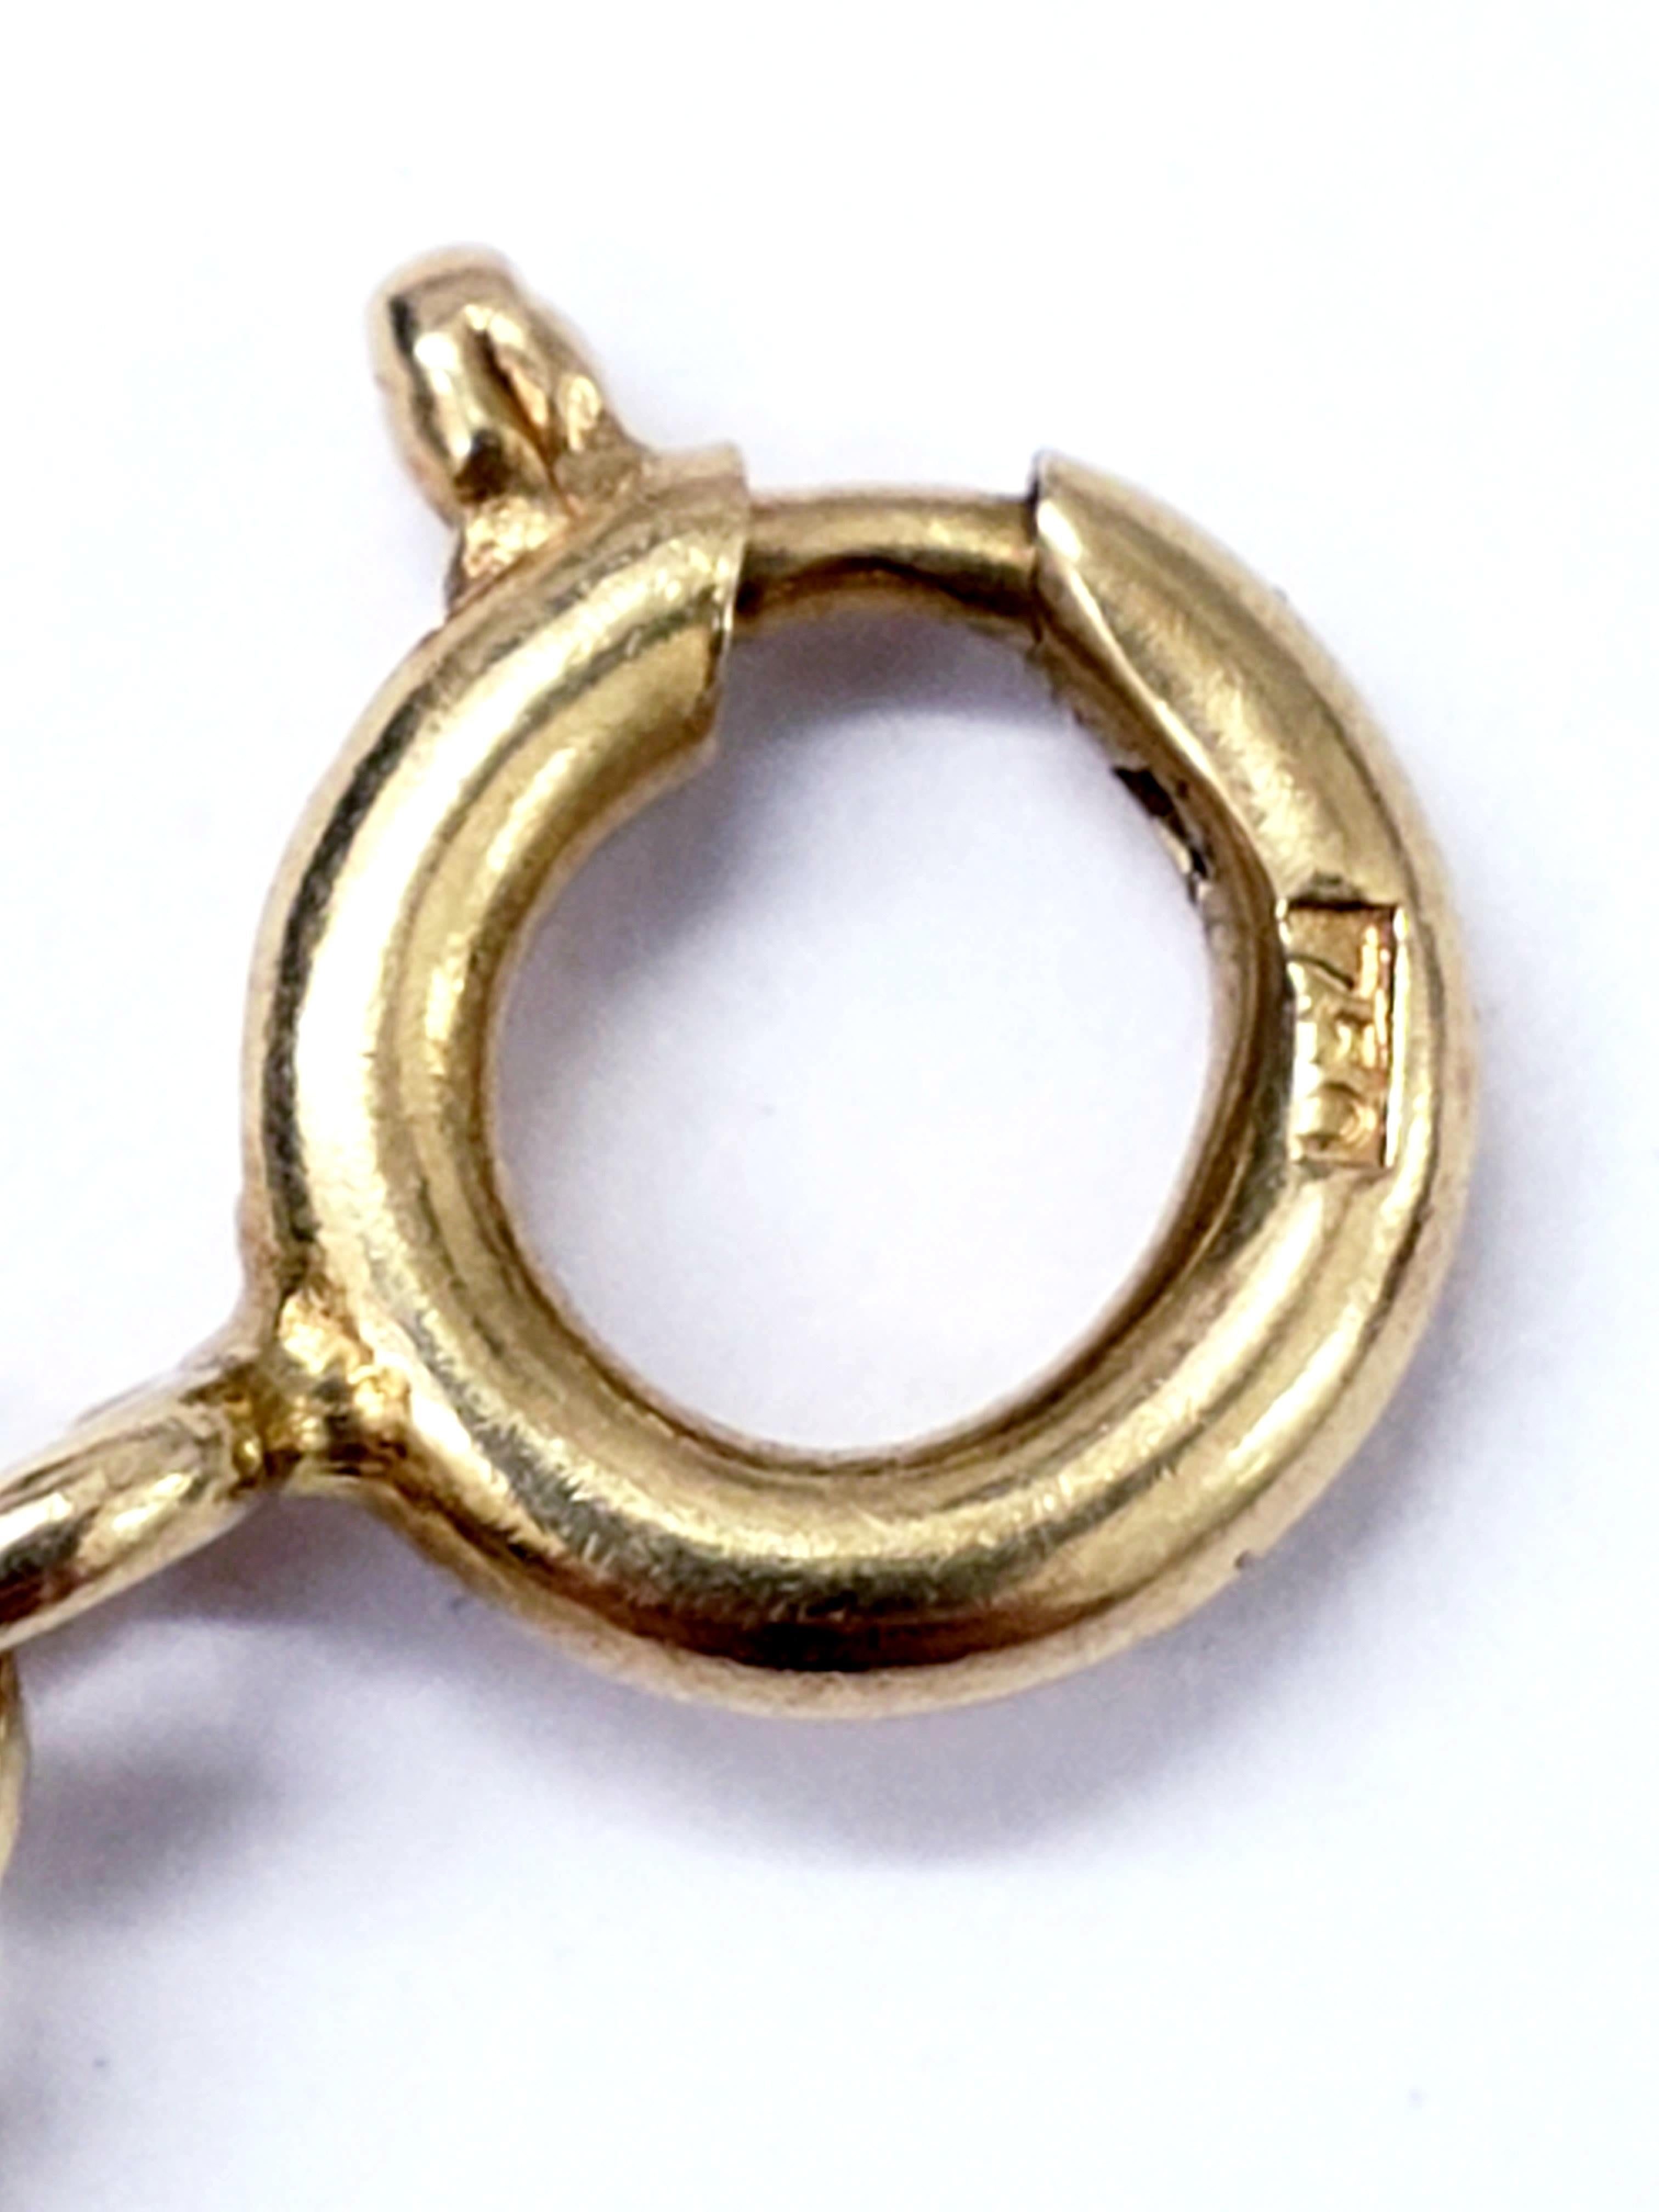 Vintage Indaerre Swirled 18 Karat Gold Link Bracelet In Excellent Condition For Sale In Miami, FL